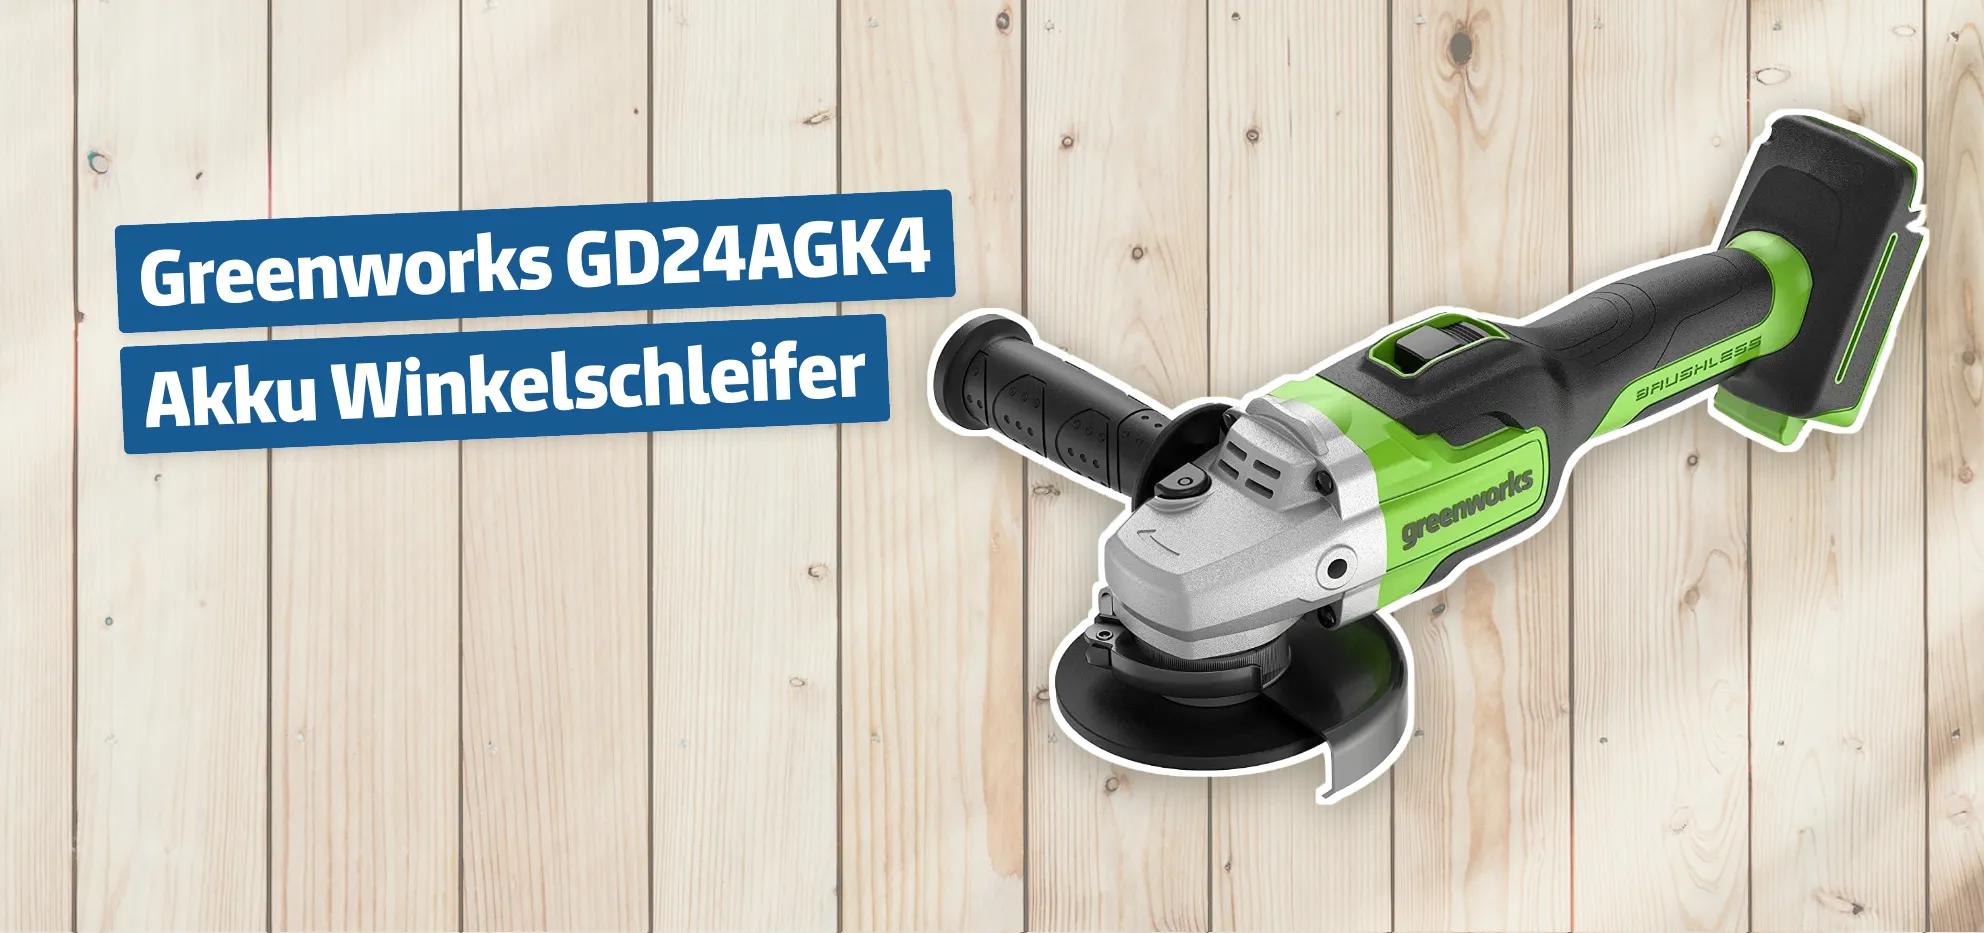 Greenworks GD24AGK4 Akku Winkelschleifer